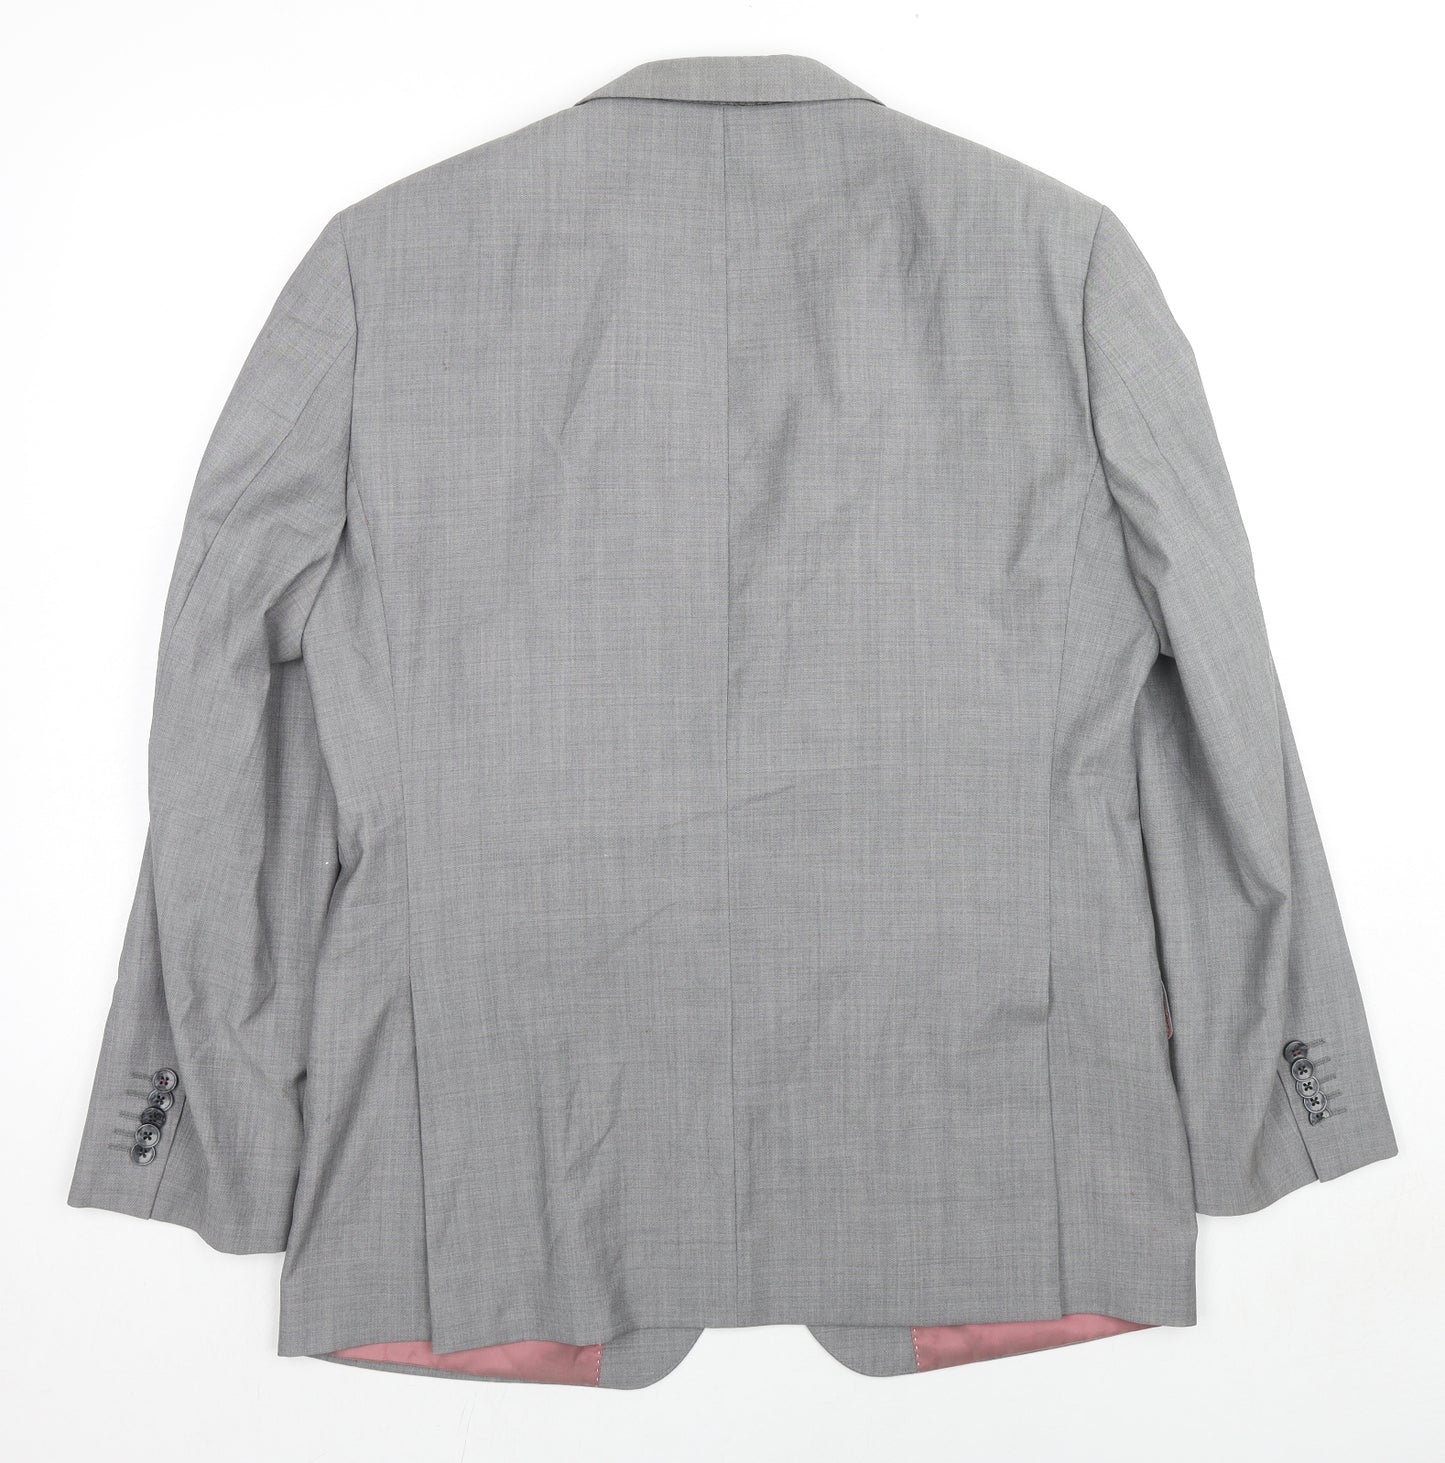 T.M.Lewin Mens Grey Wool Jacket Suit Jacket Size 44 Regular - 5 Button Sleeve